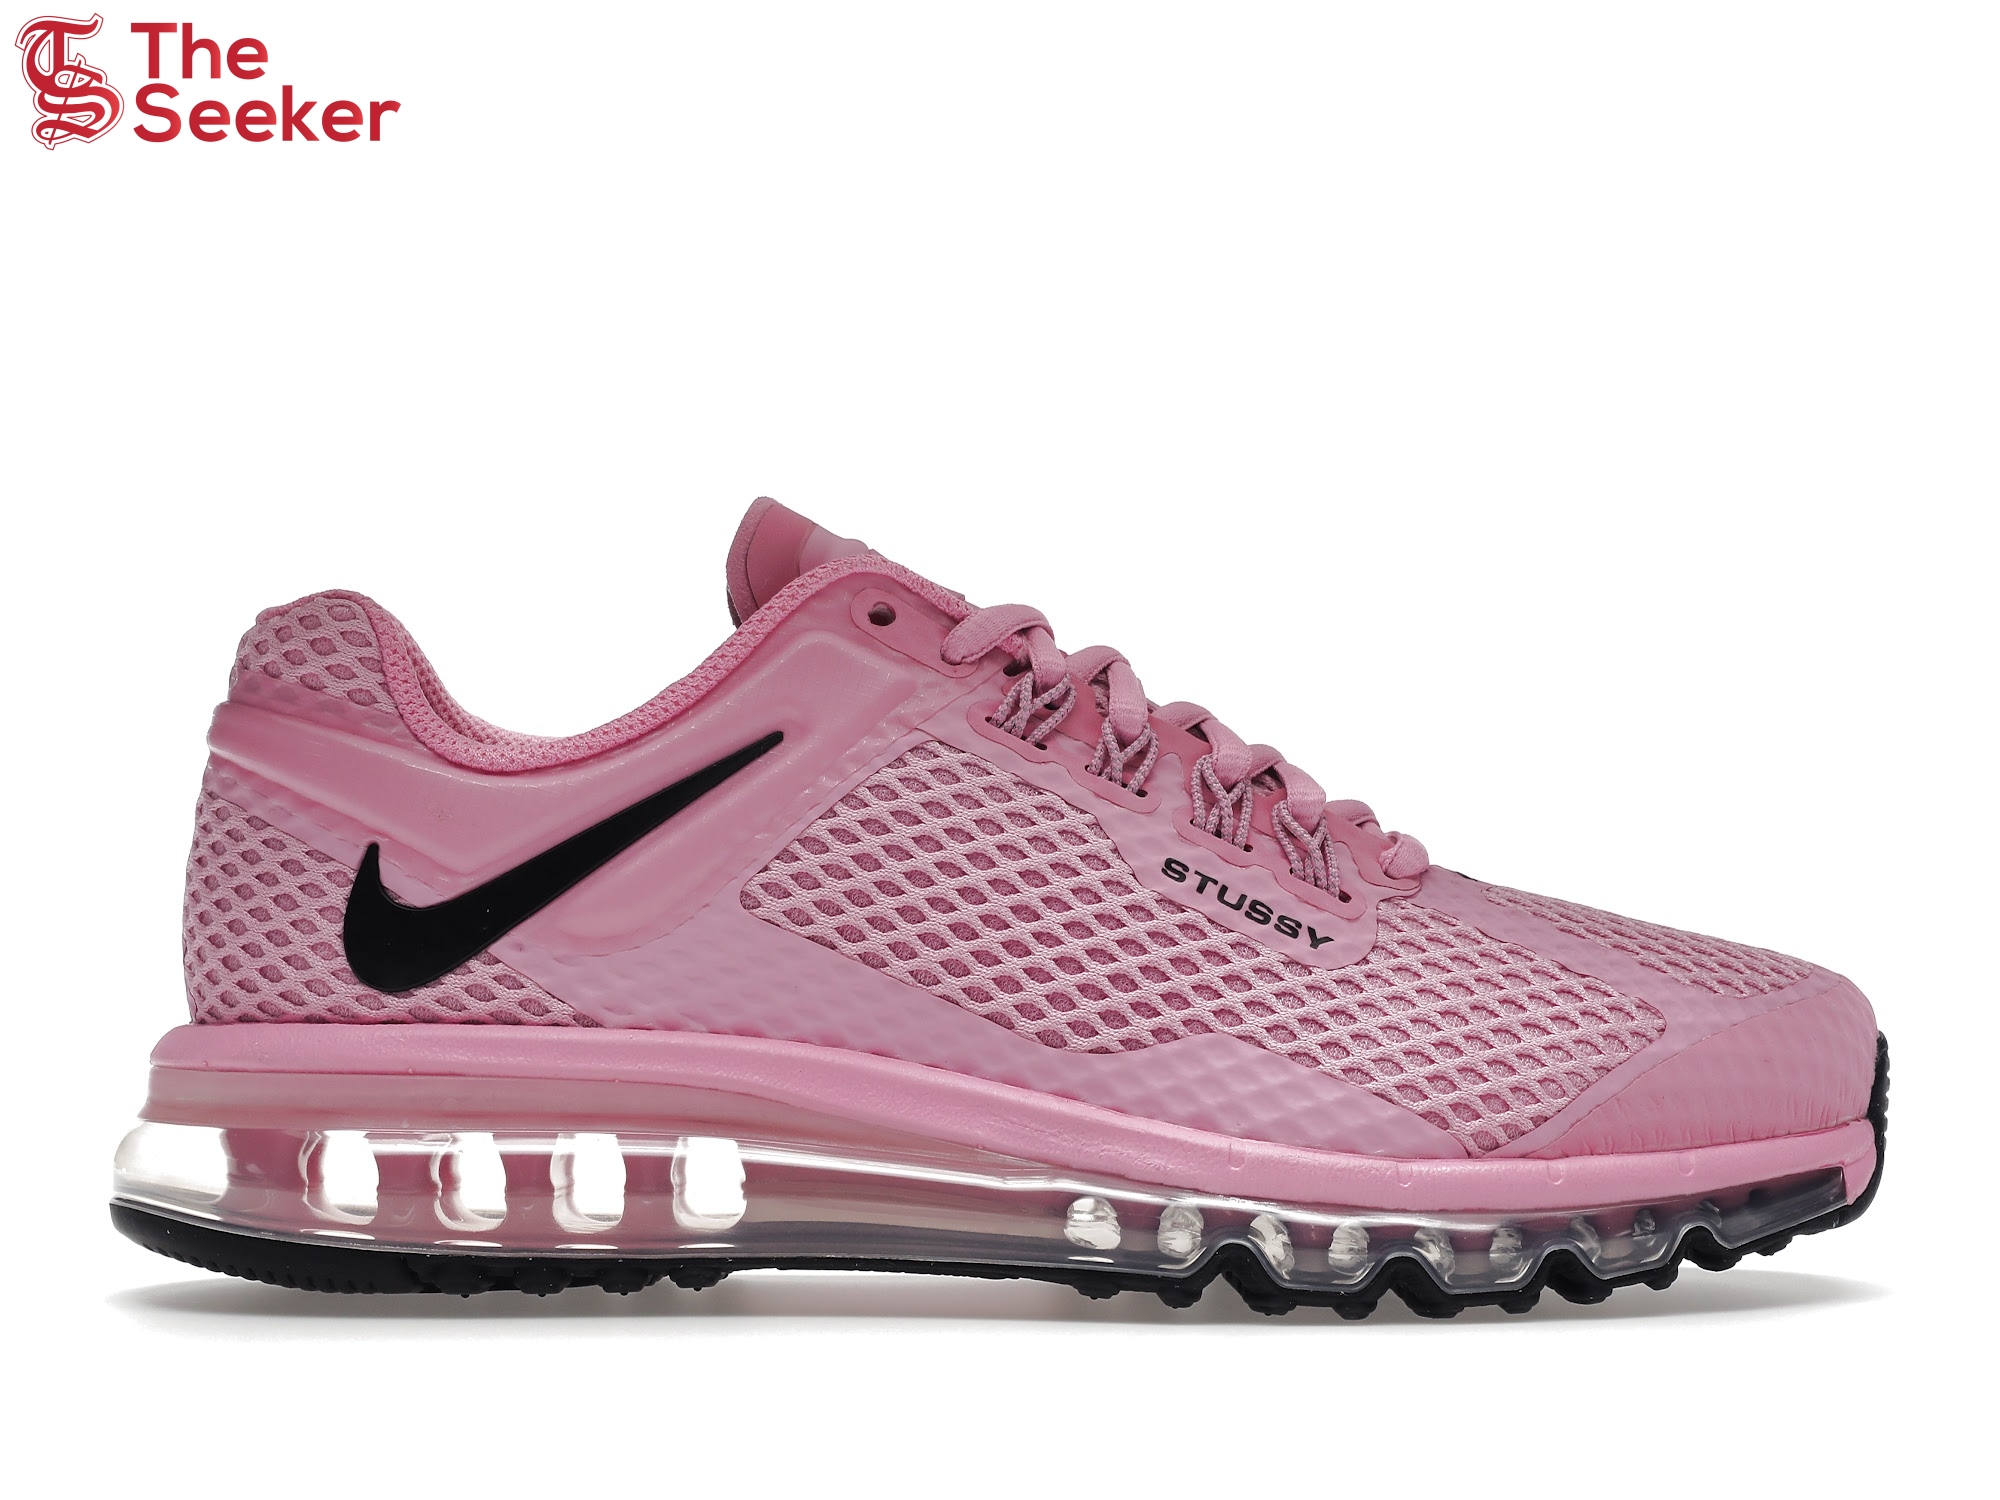 Nike Air Max 2013 Stussy Pink